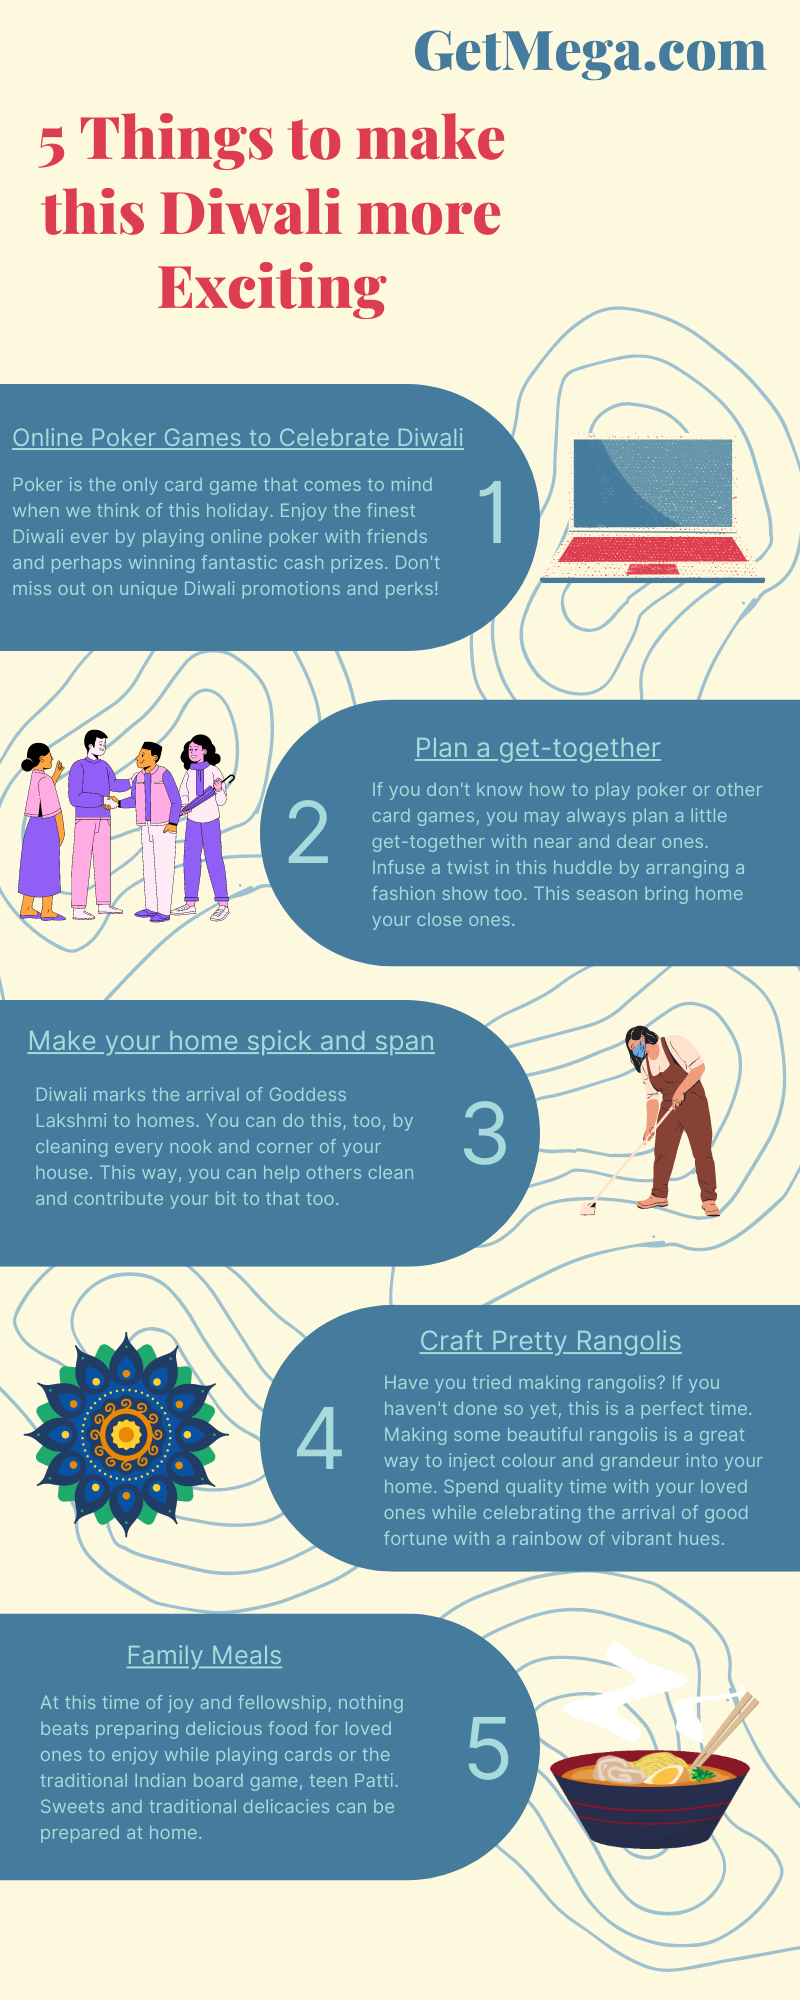 5 Things to make this Diwali more Exciting - GetMega